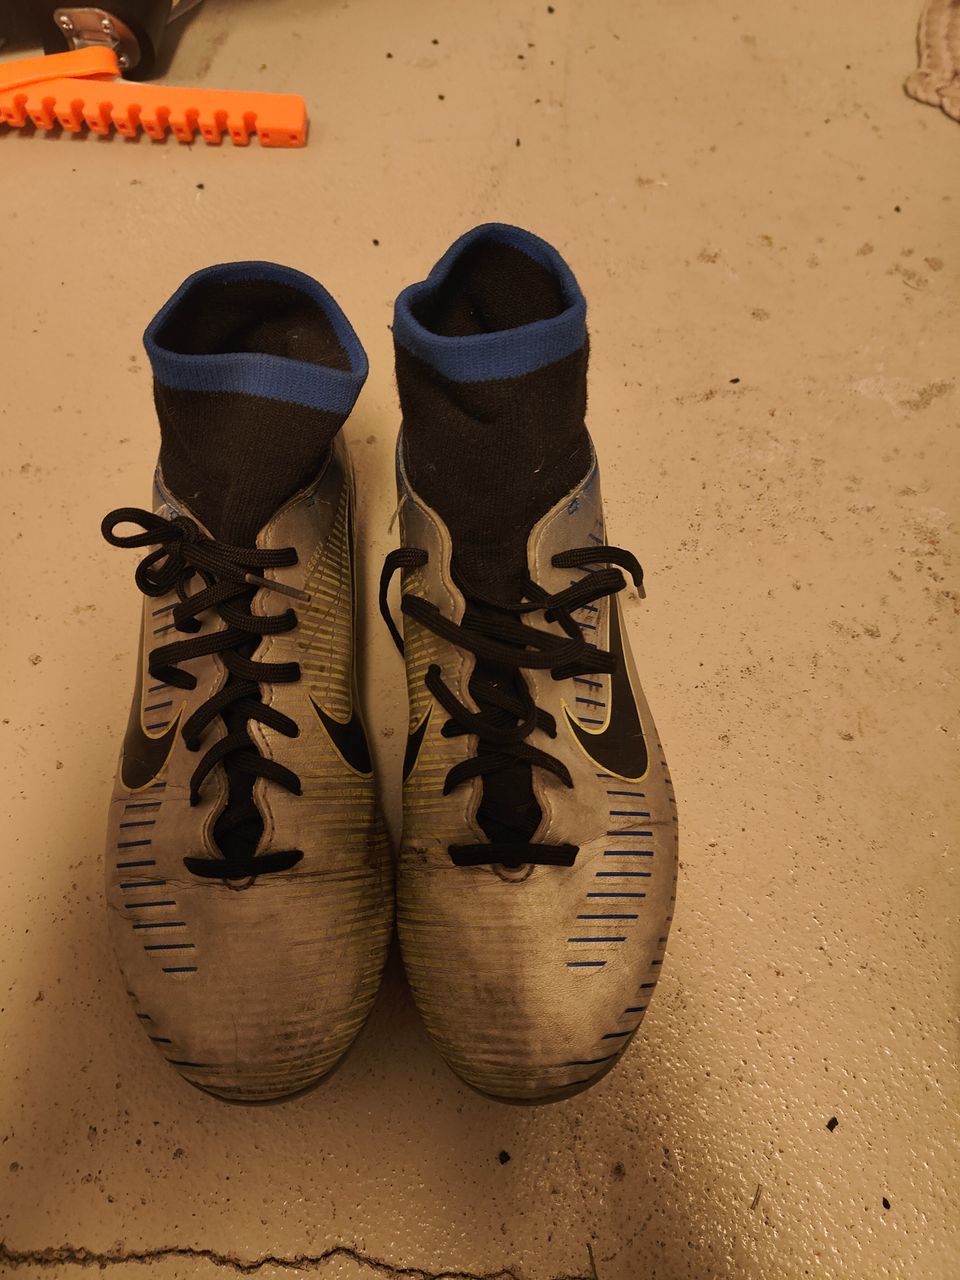 Nike mercurial jalkapallo kengät 38.5